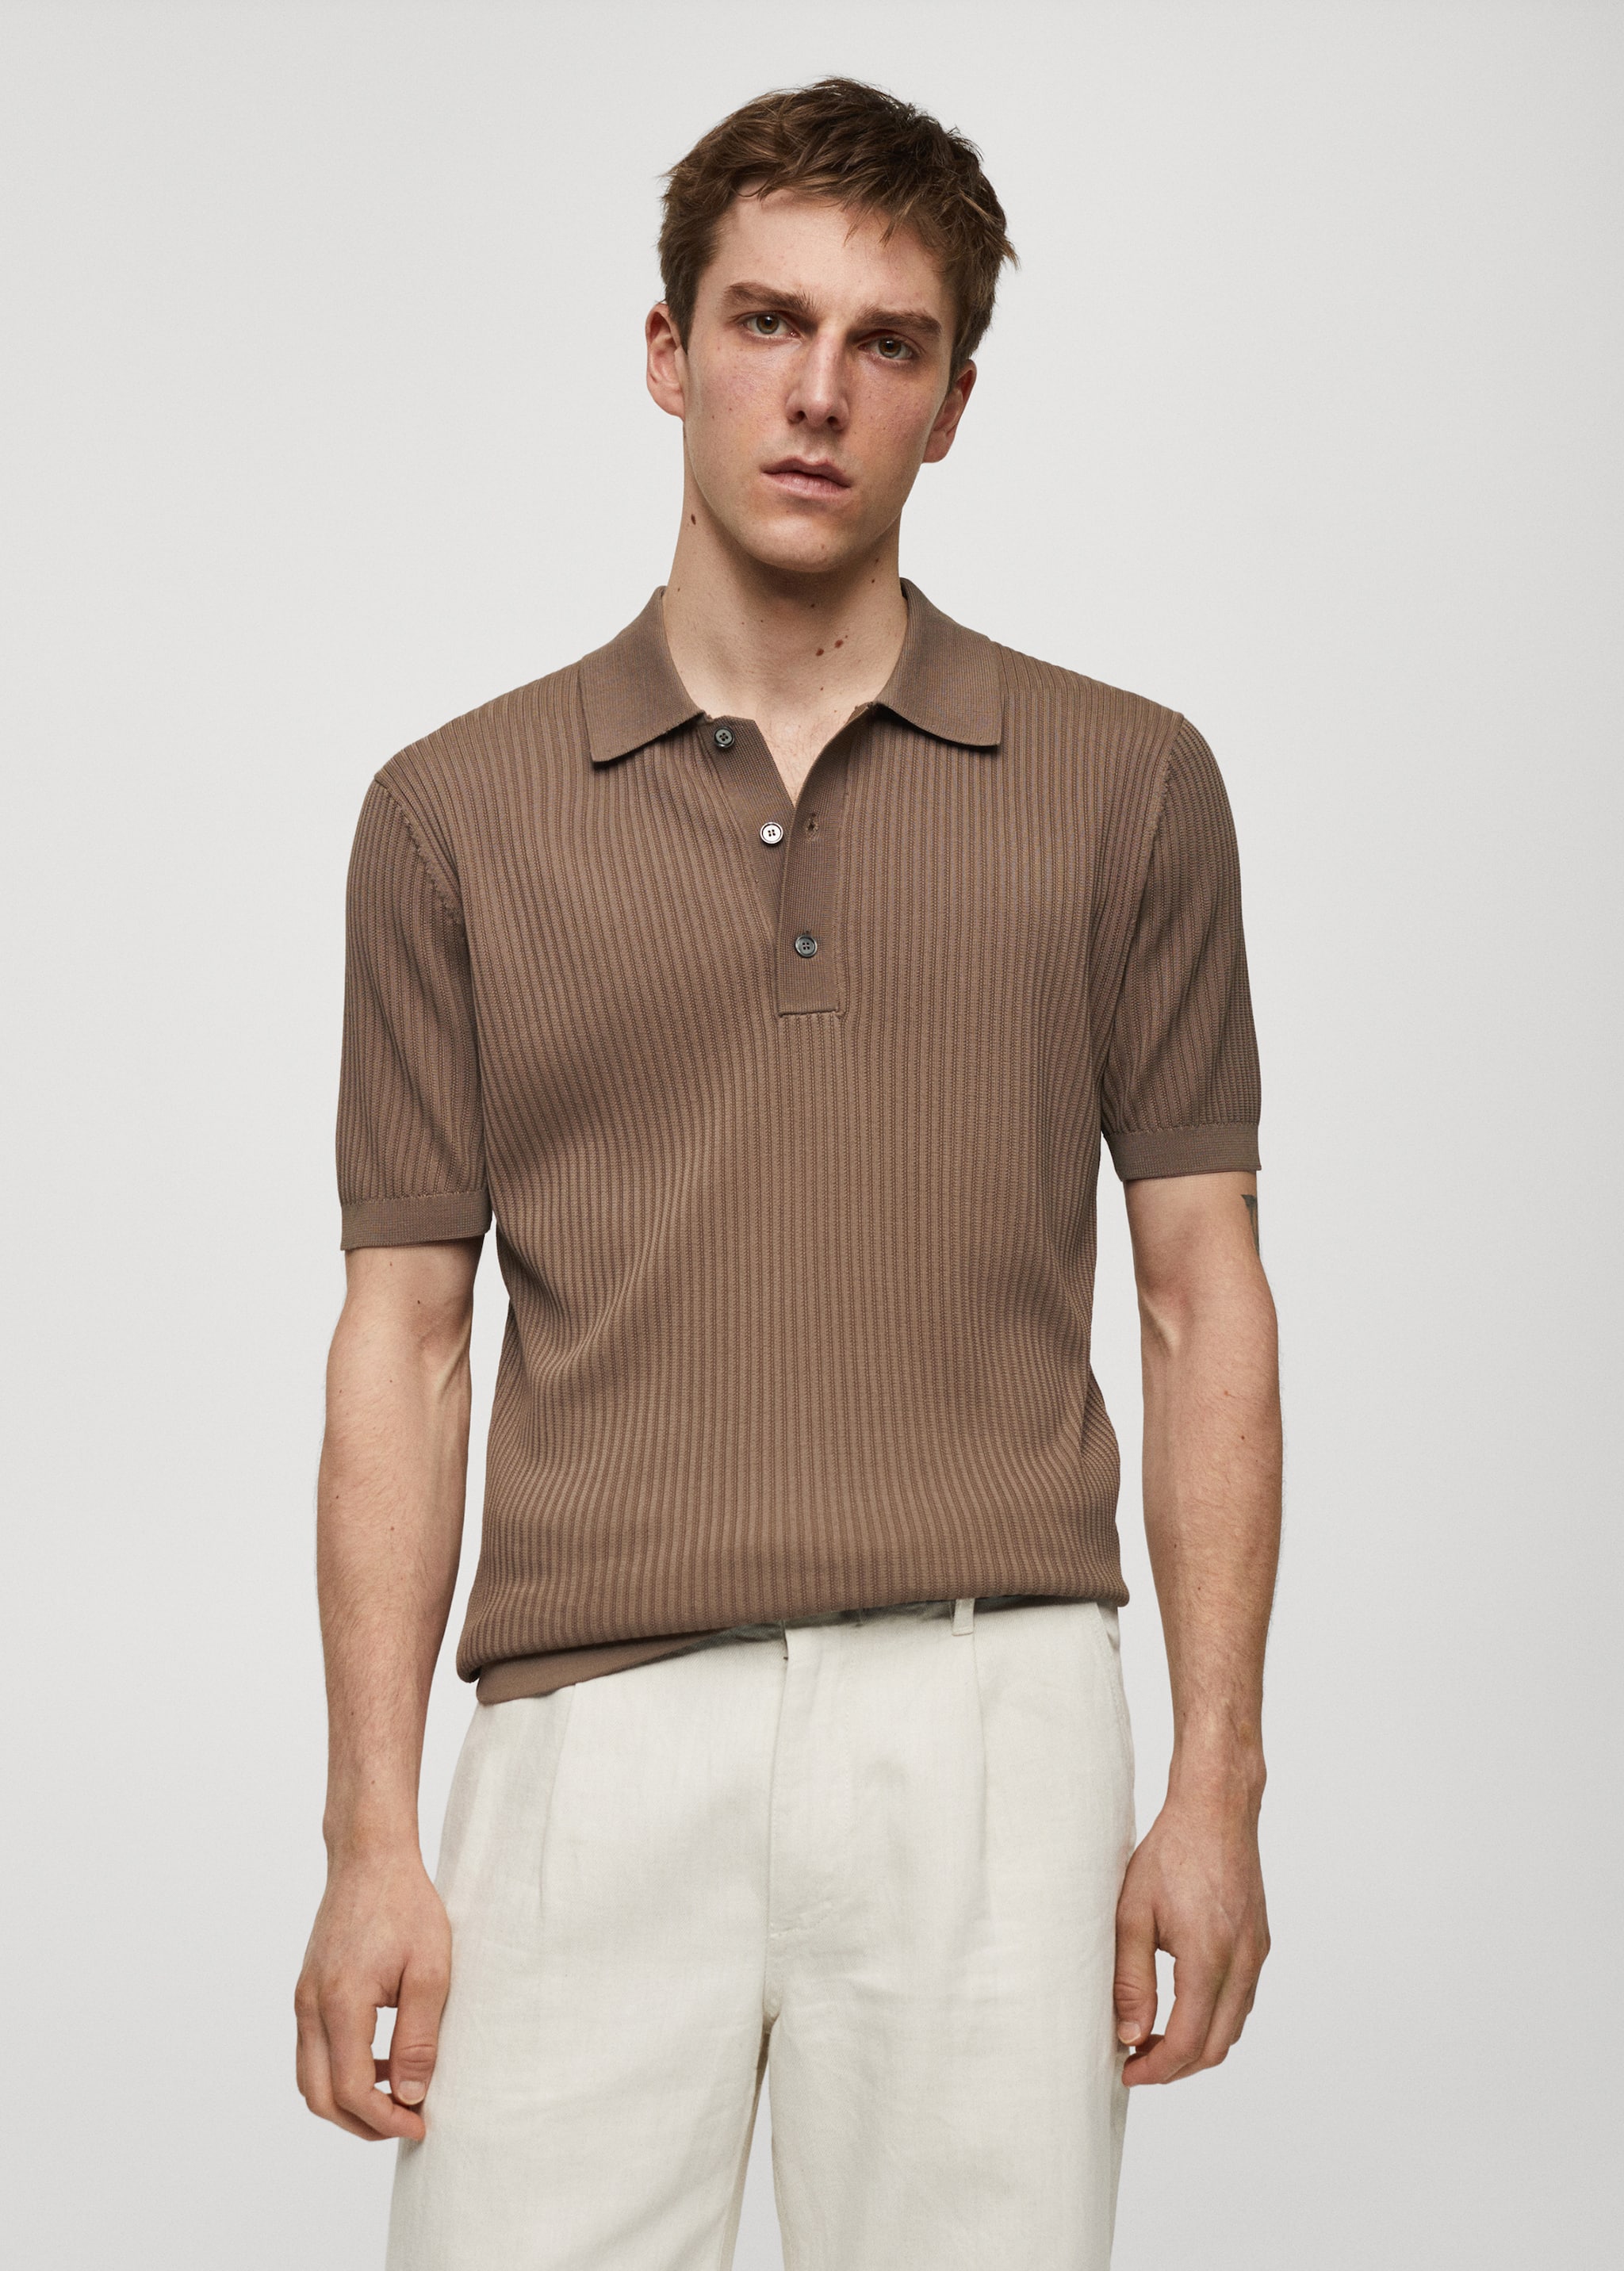 Knit cotton polo shirt - Medium plane